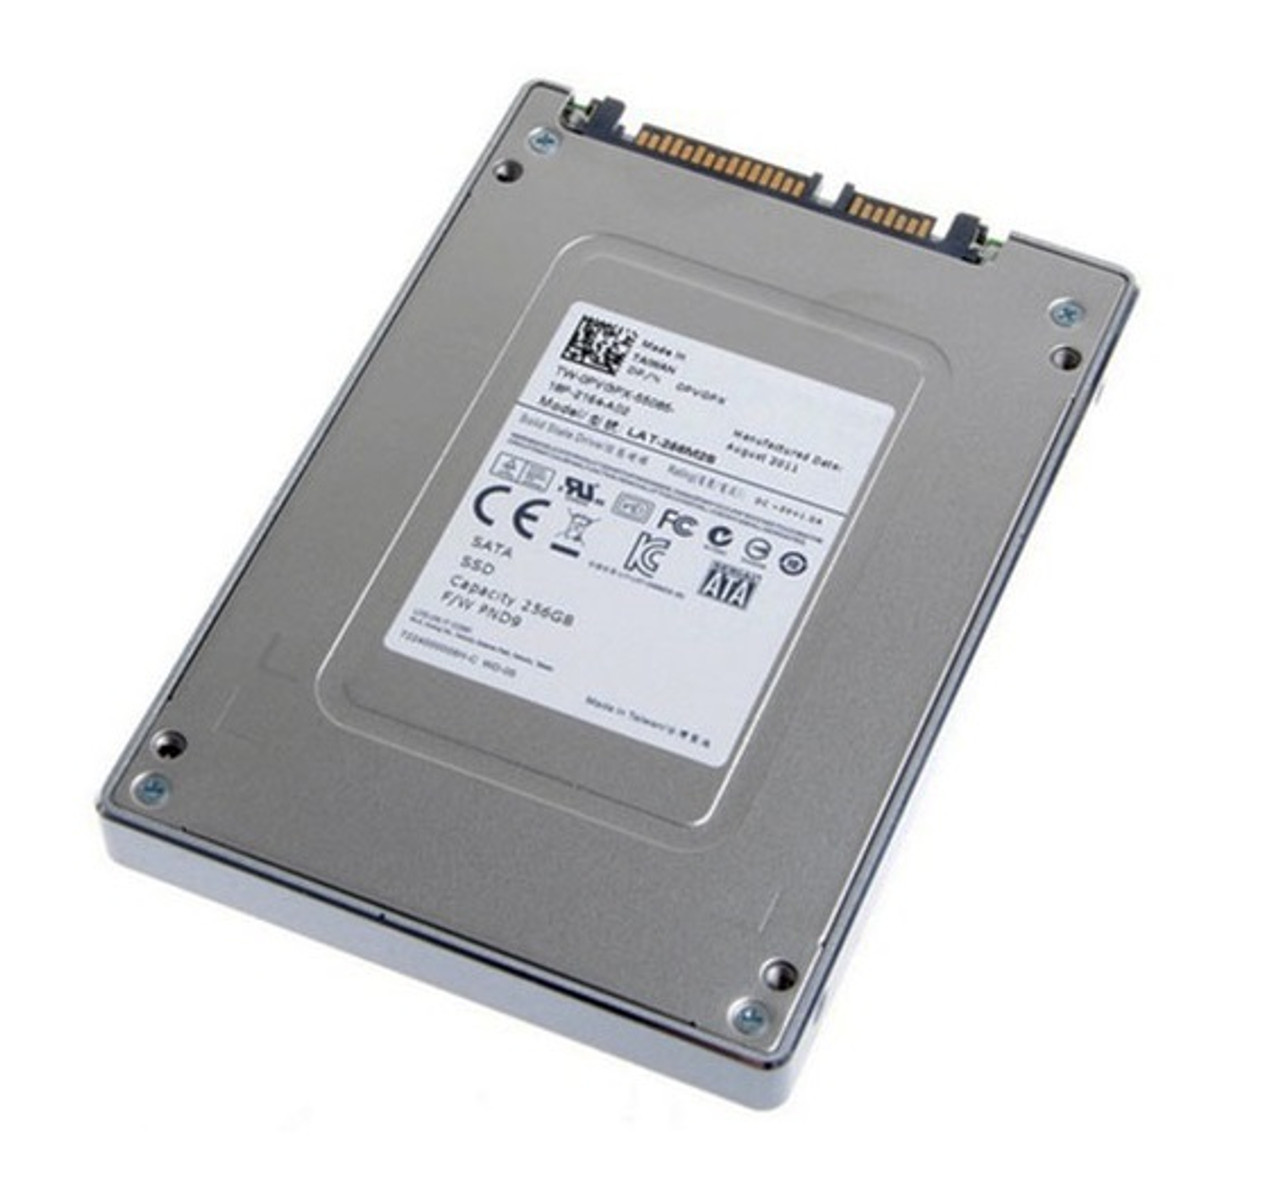 118032774-A02 - EMC 200GB Fibre Channel 4Gb/s LFF Solid State Drive